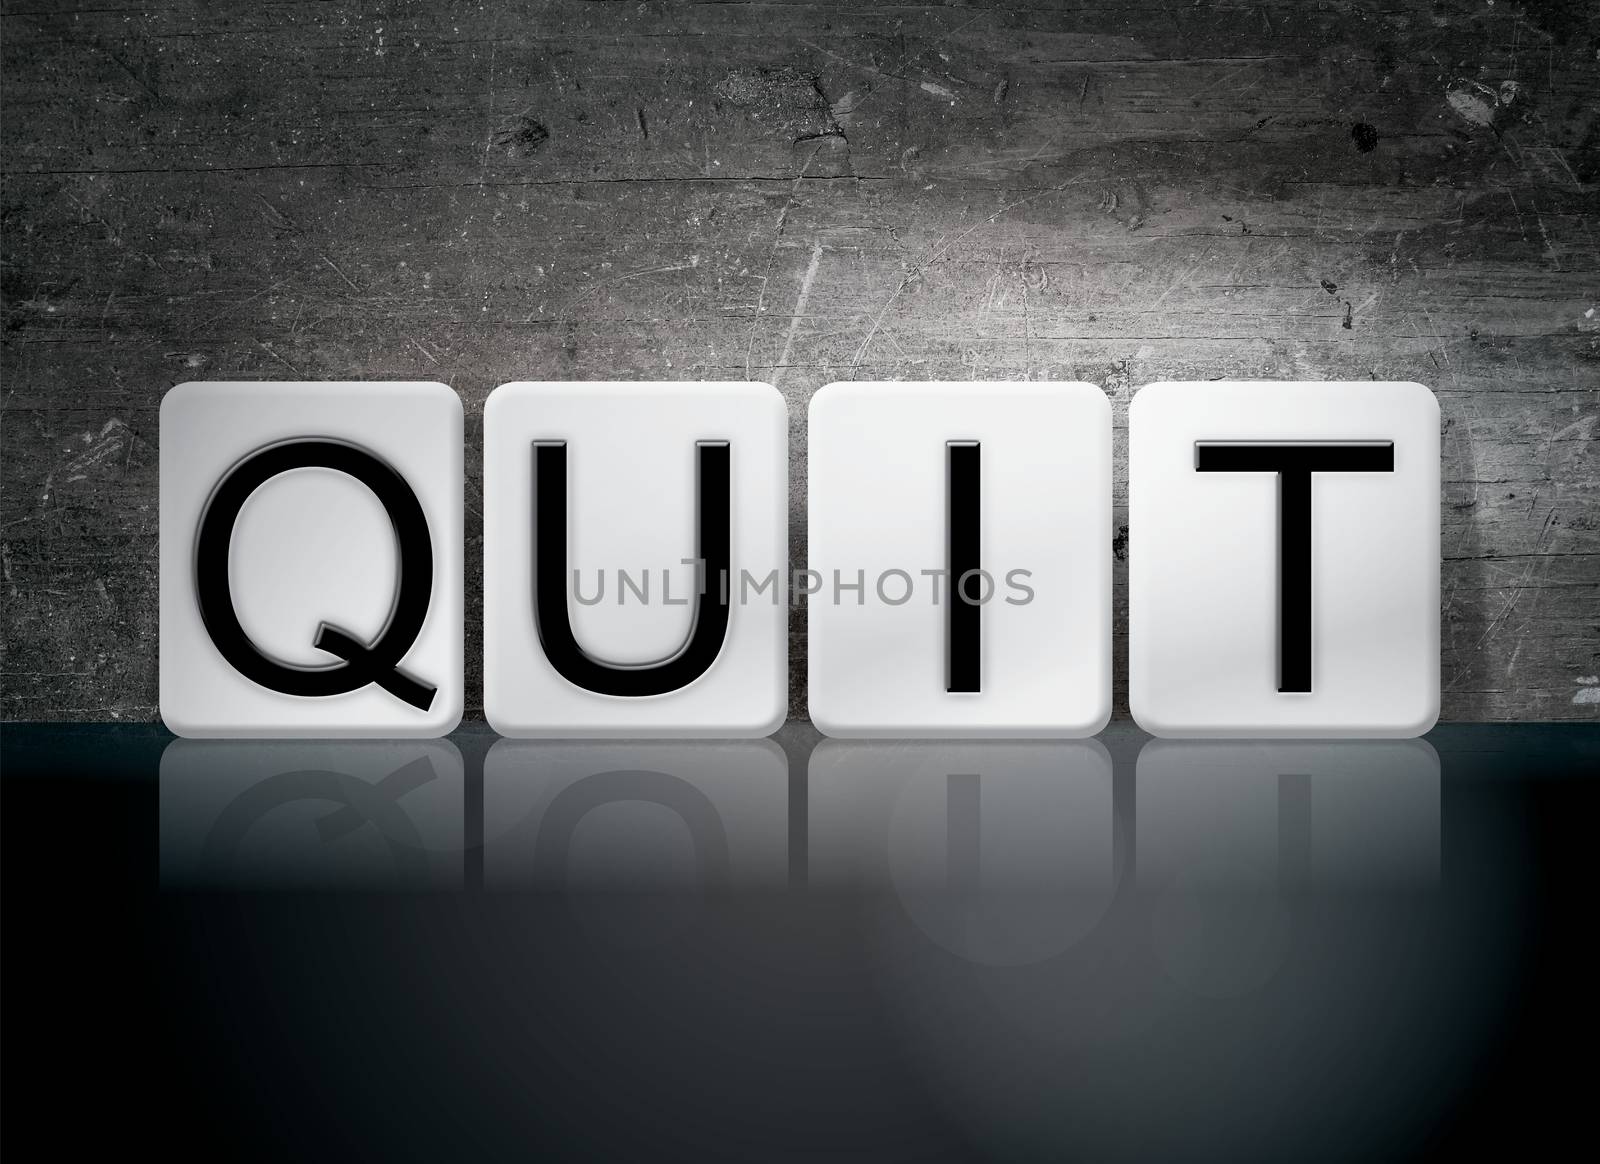 The word "Quit" written in white tiles against a dark vintage grunge background.